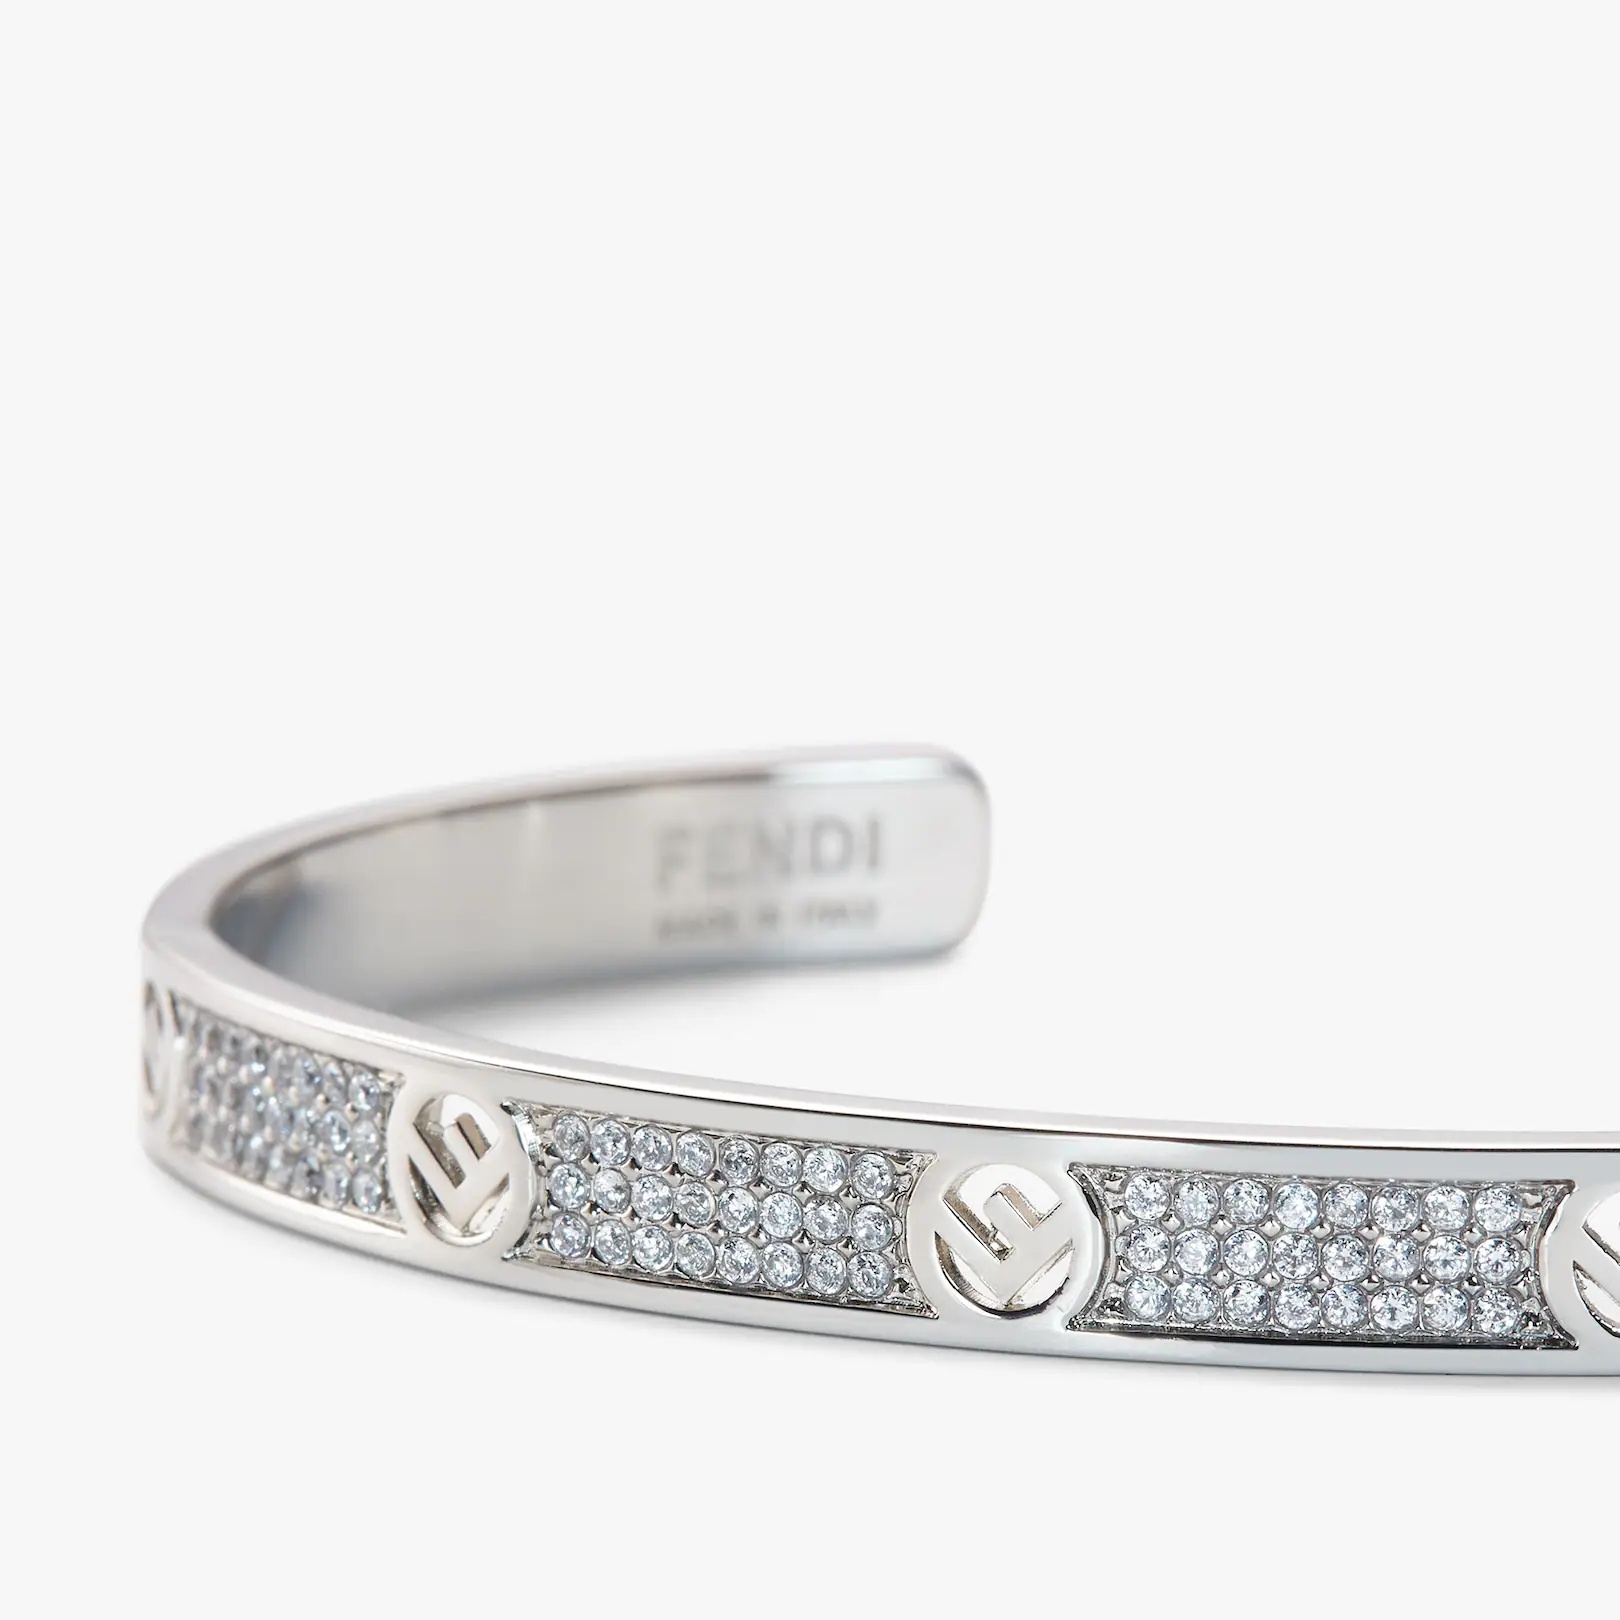 Silver-colored bracelet - 2